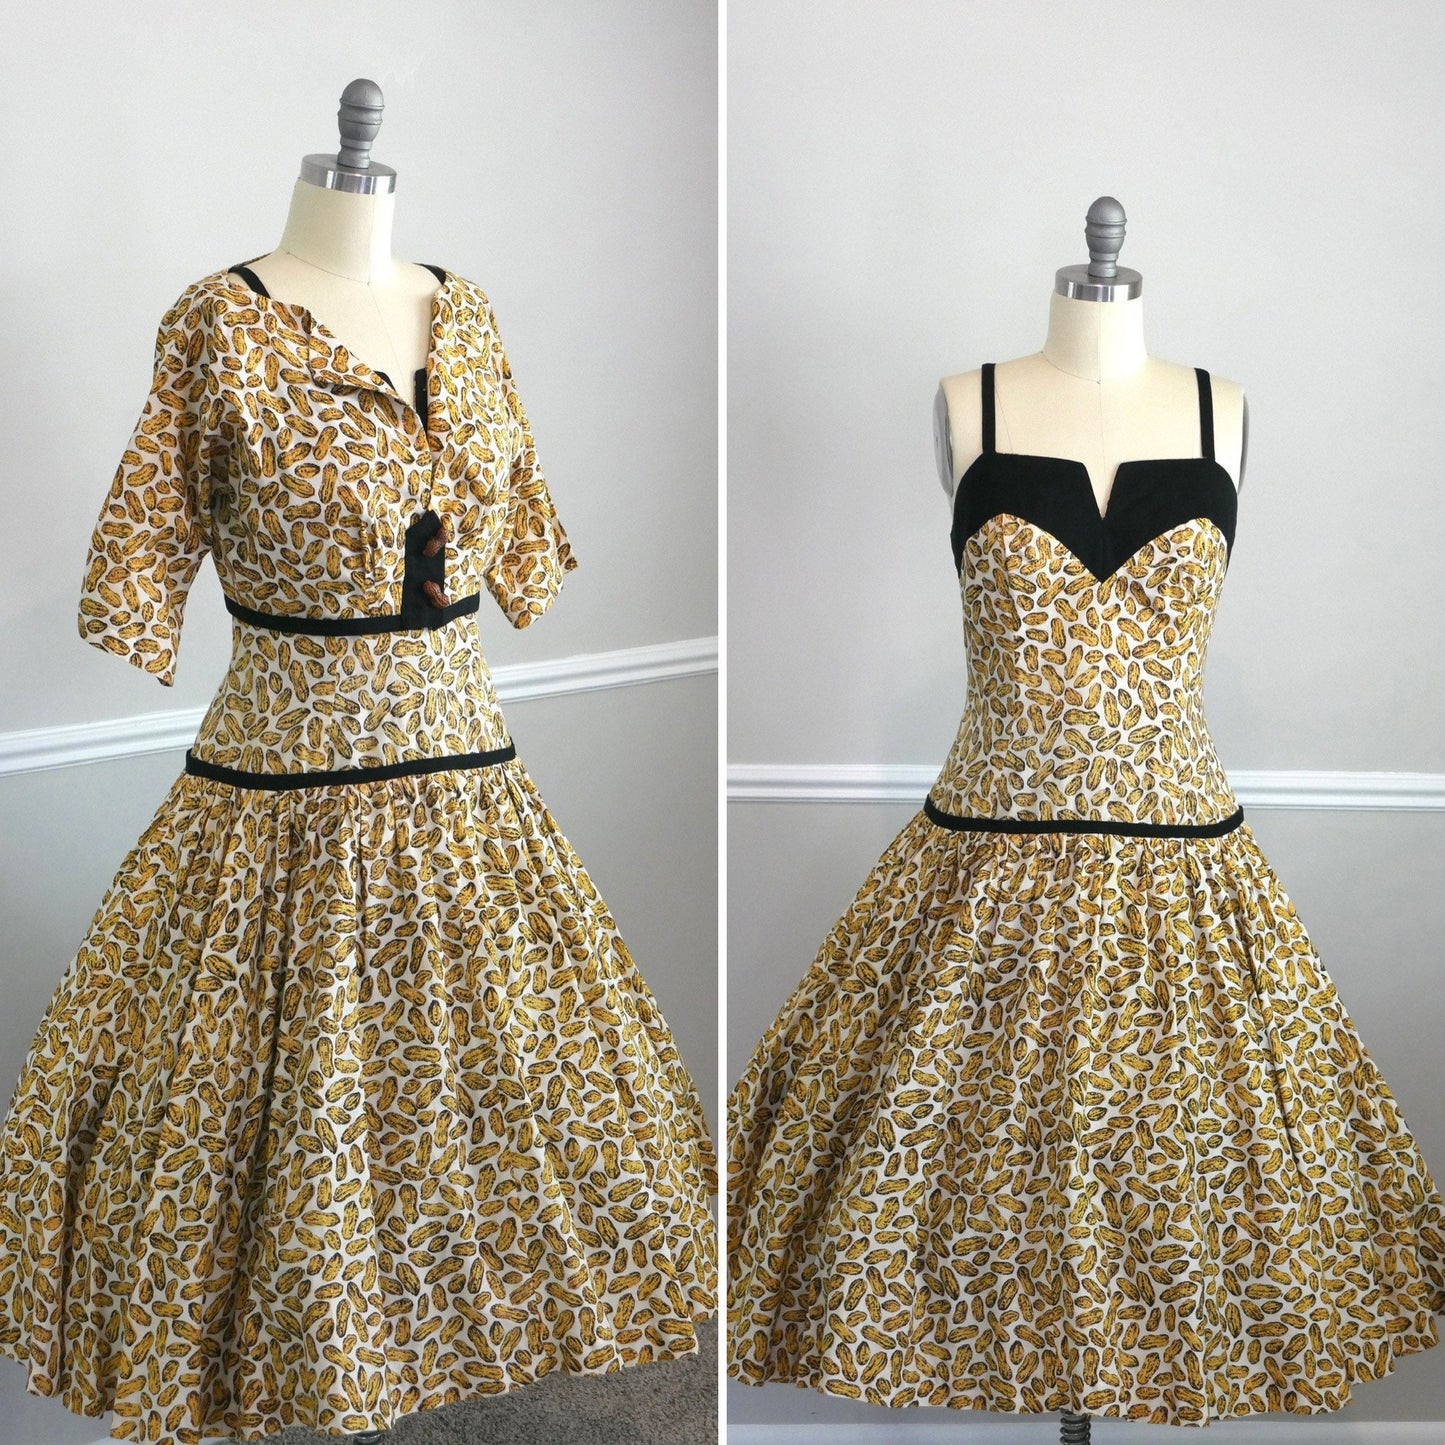 Vintage 1950s Sundress and Bolero Set / 1950s full dress / 50s retro novelty print peanut print dress fit and flare full skirt size M